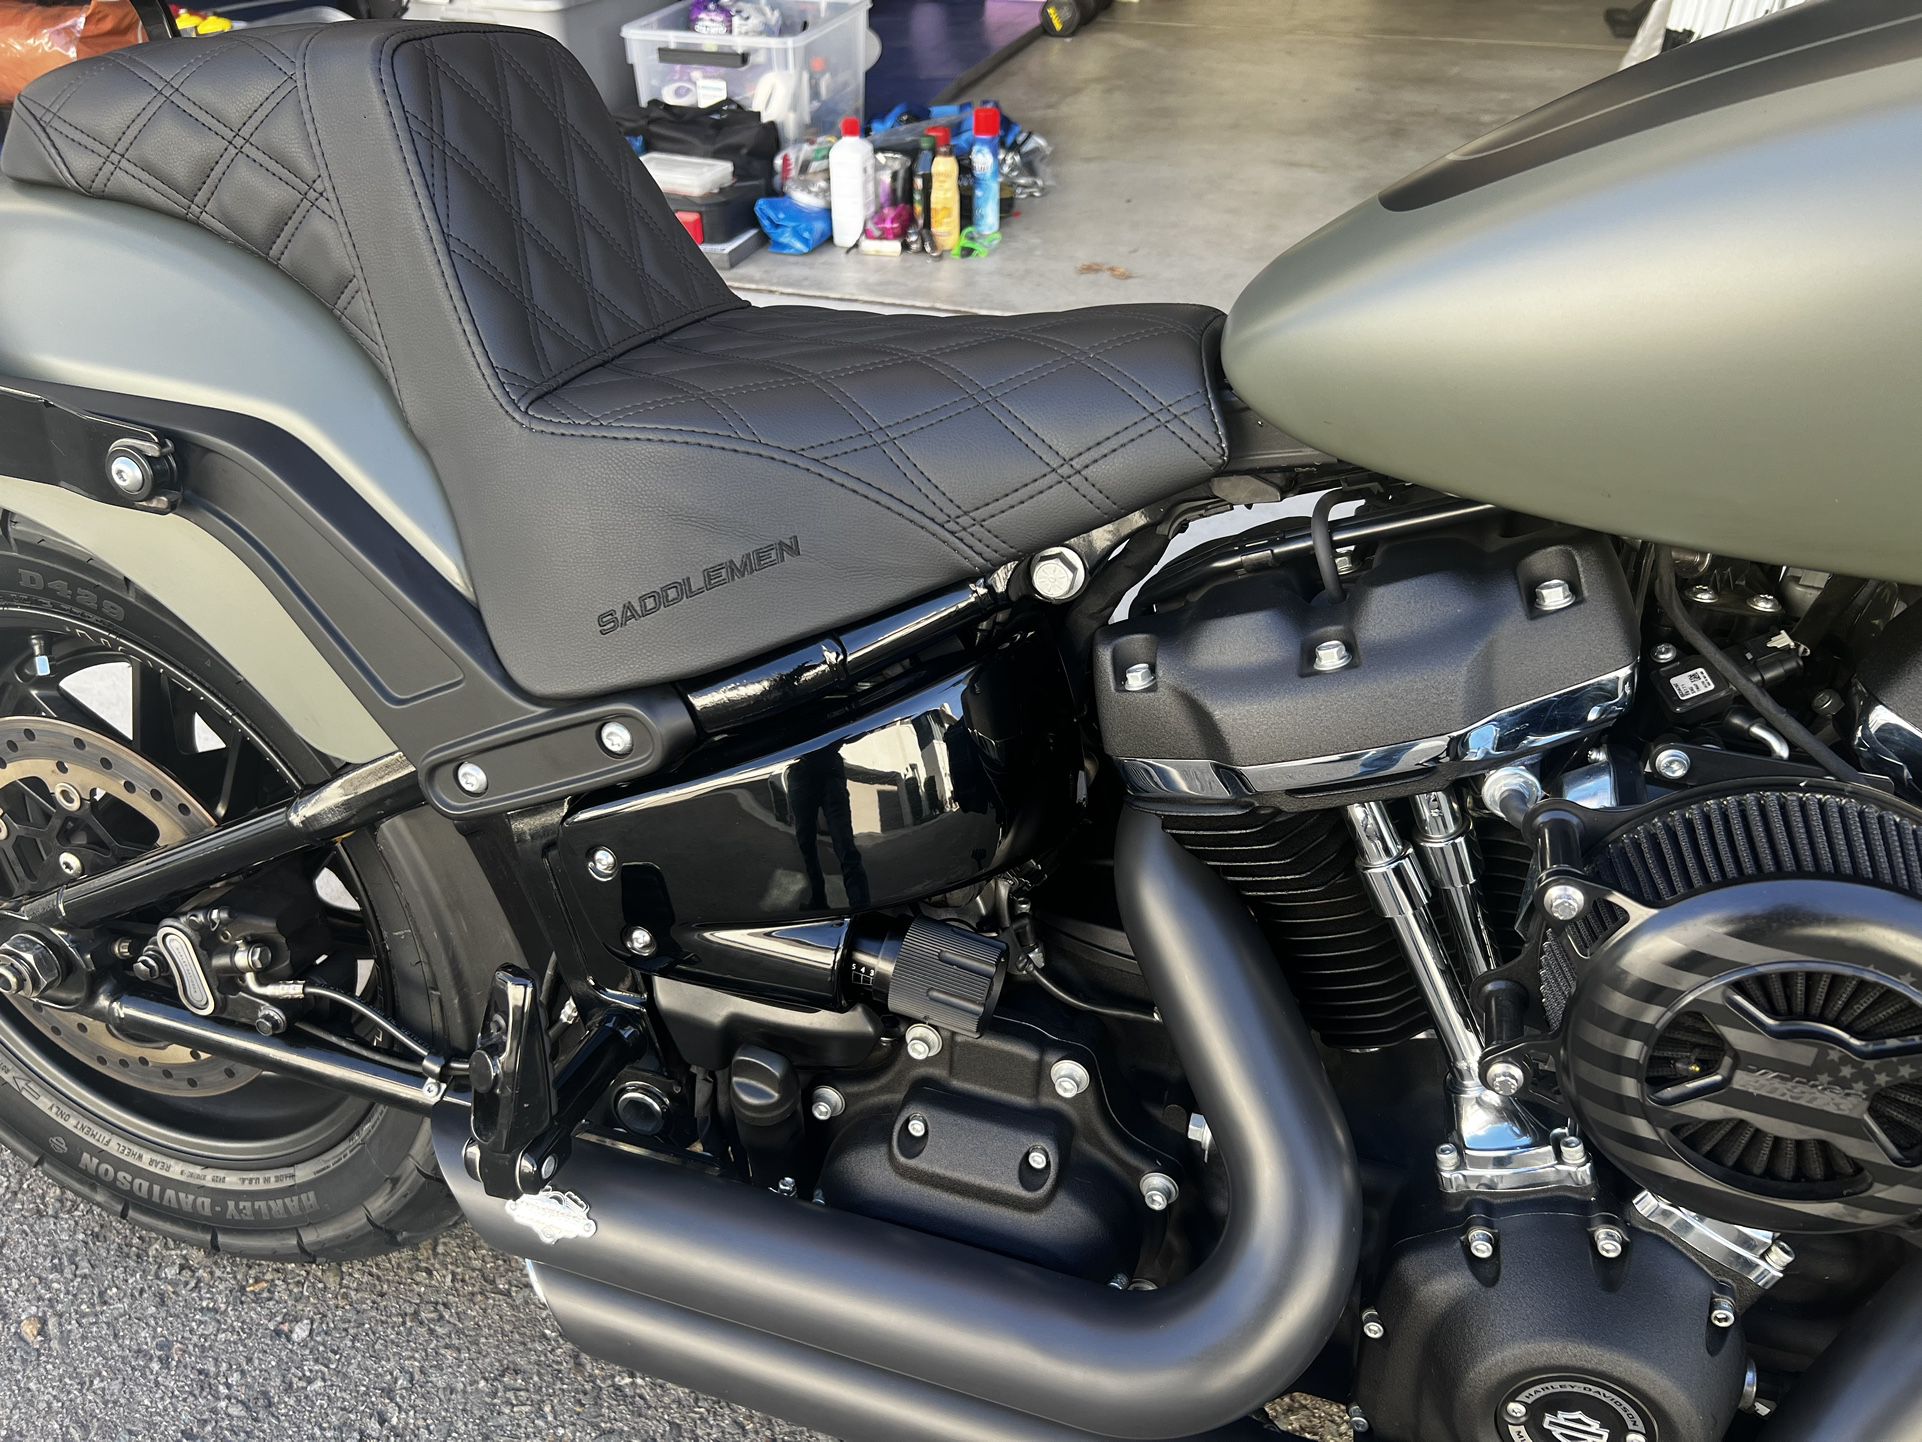 2021 Harley Davidson Fat Bob 114 Special Edition